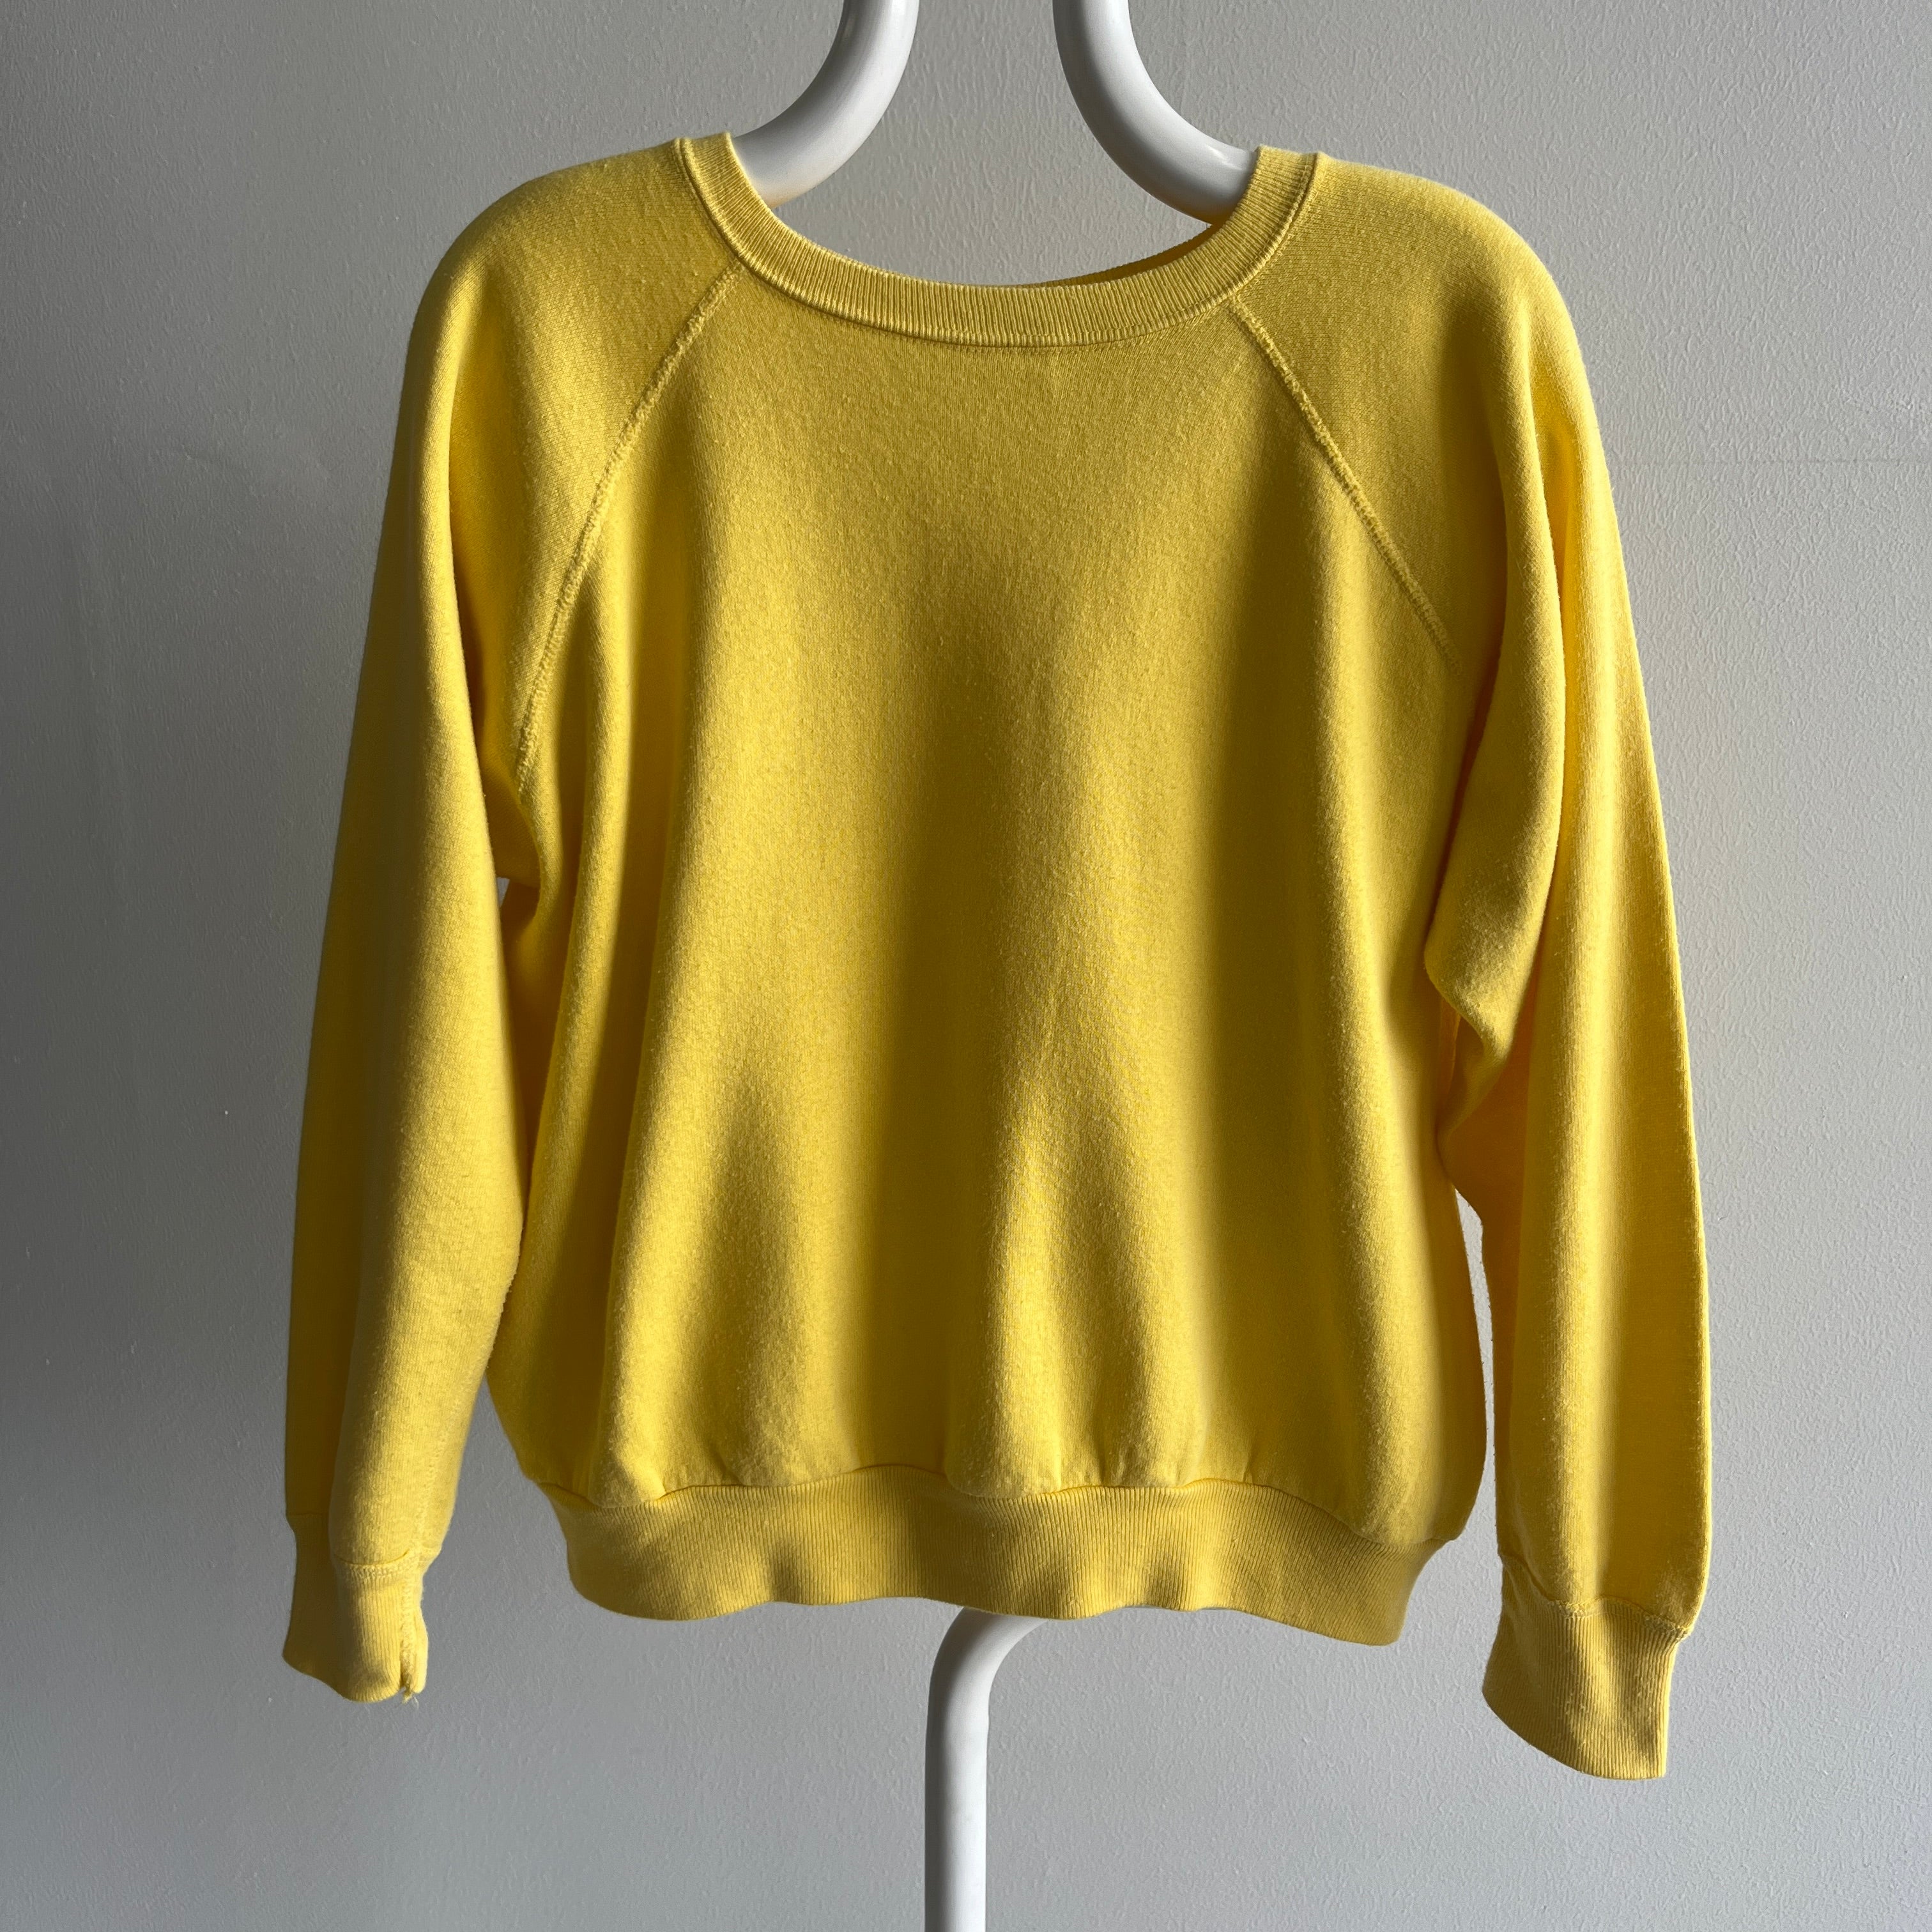 1980s Buttery Yellow Sweatshirt - !!!!!